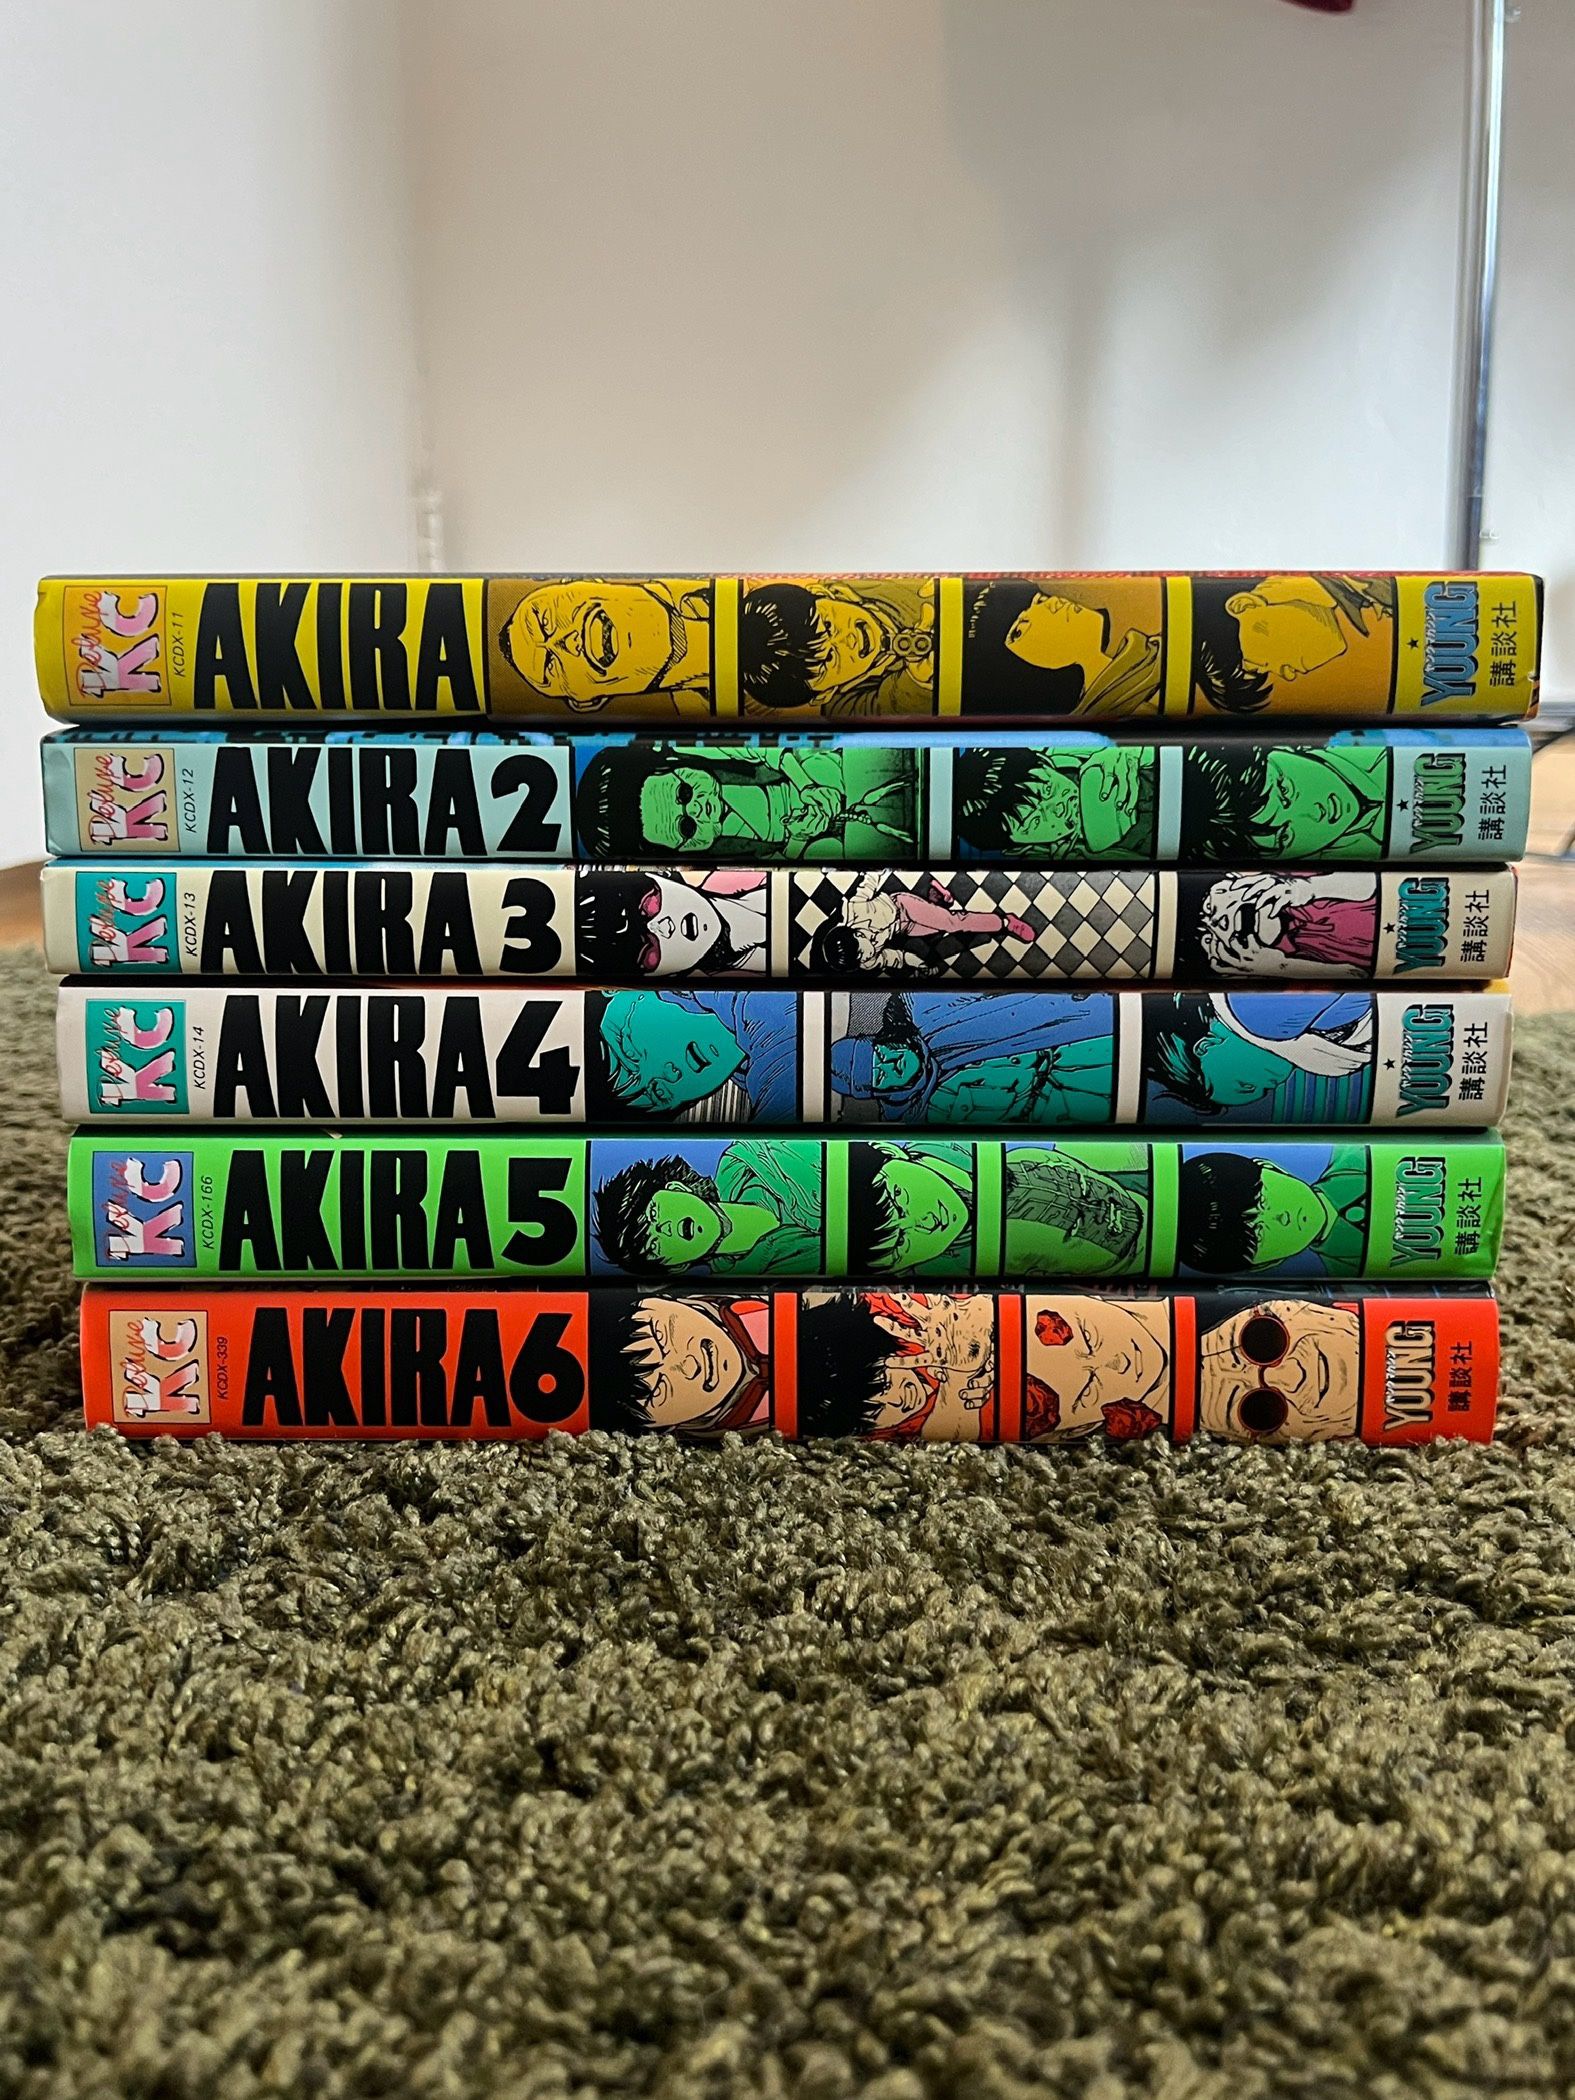 AKIRA Manga All 6 Volumes (Original Japanese Version)